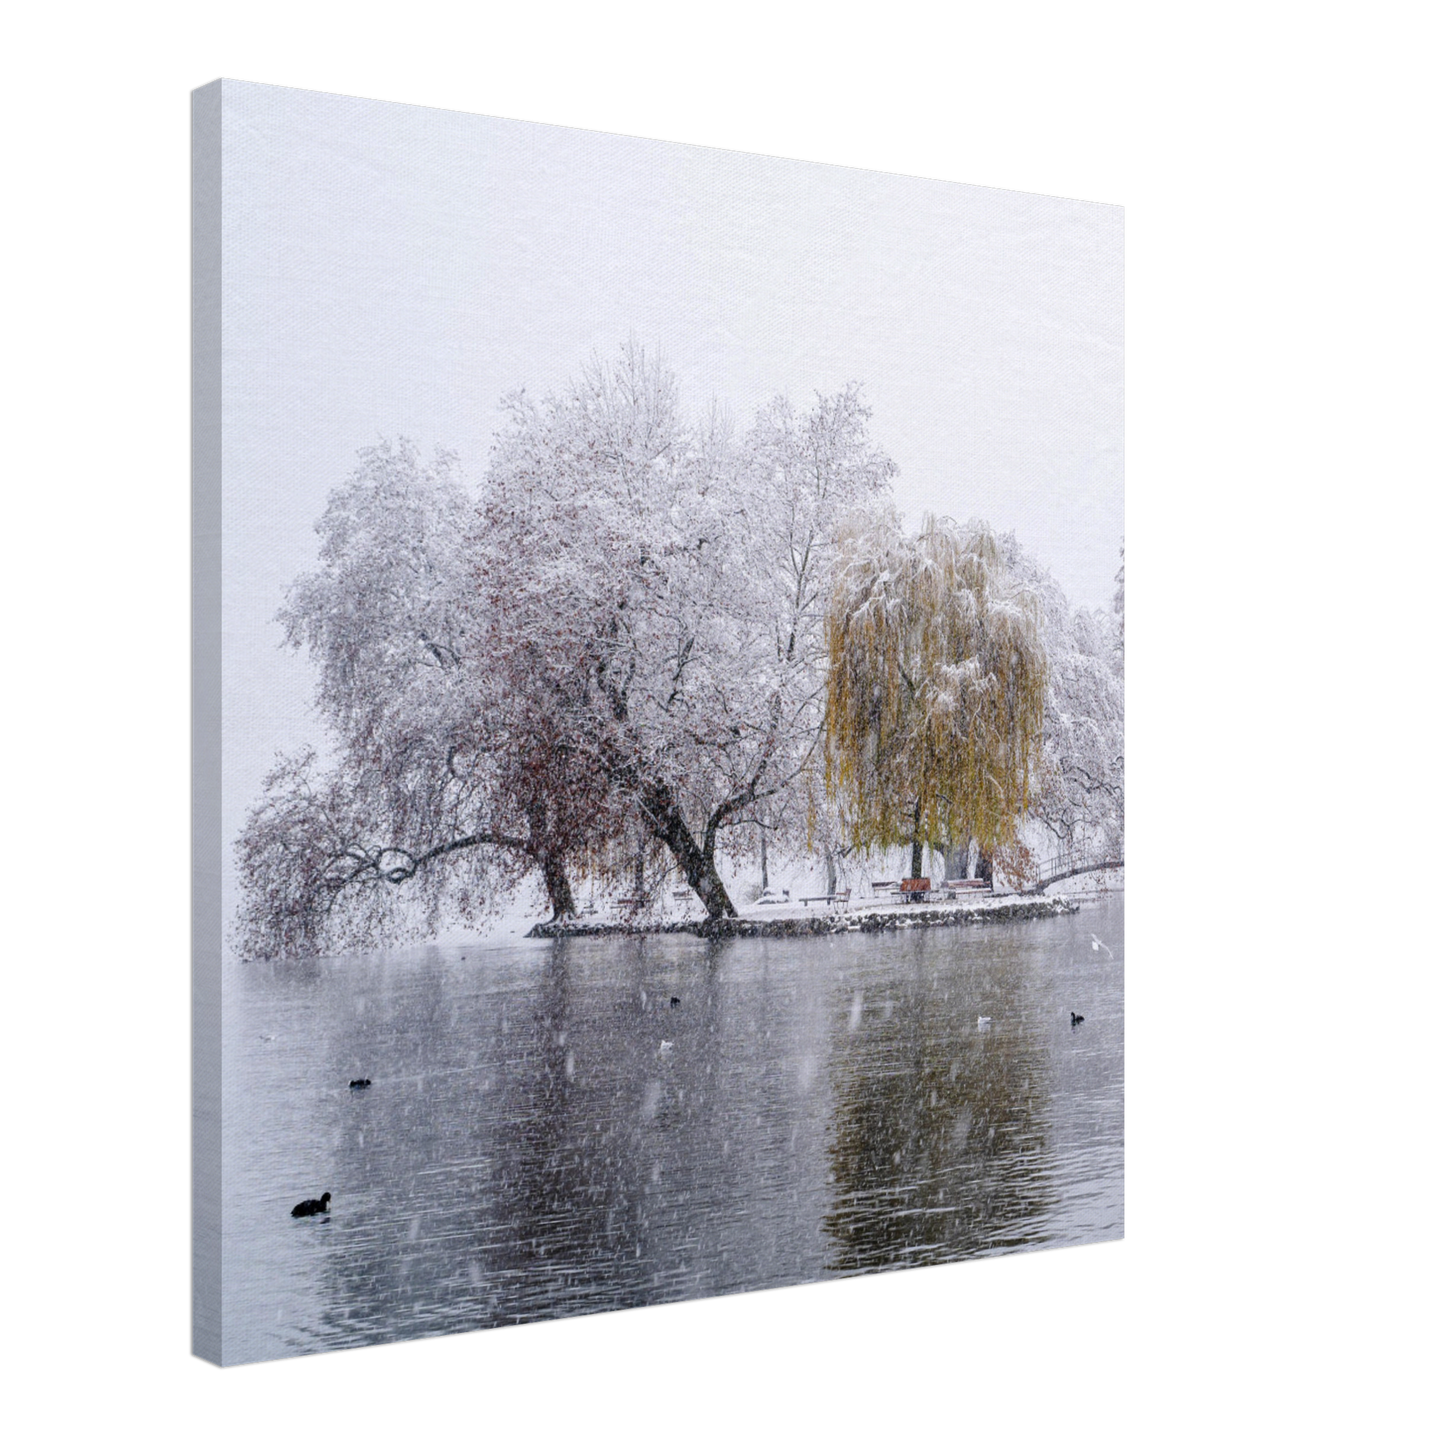 Snowfall in Villettepark on canvas 